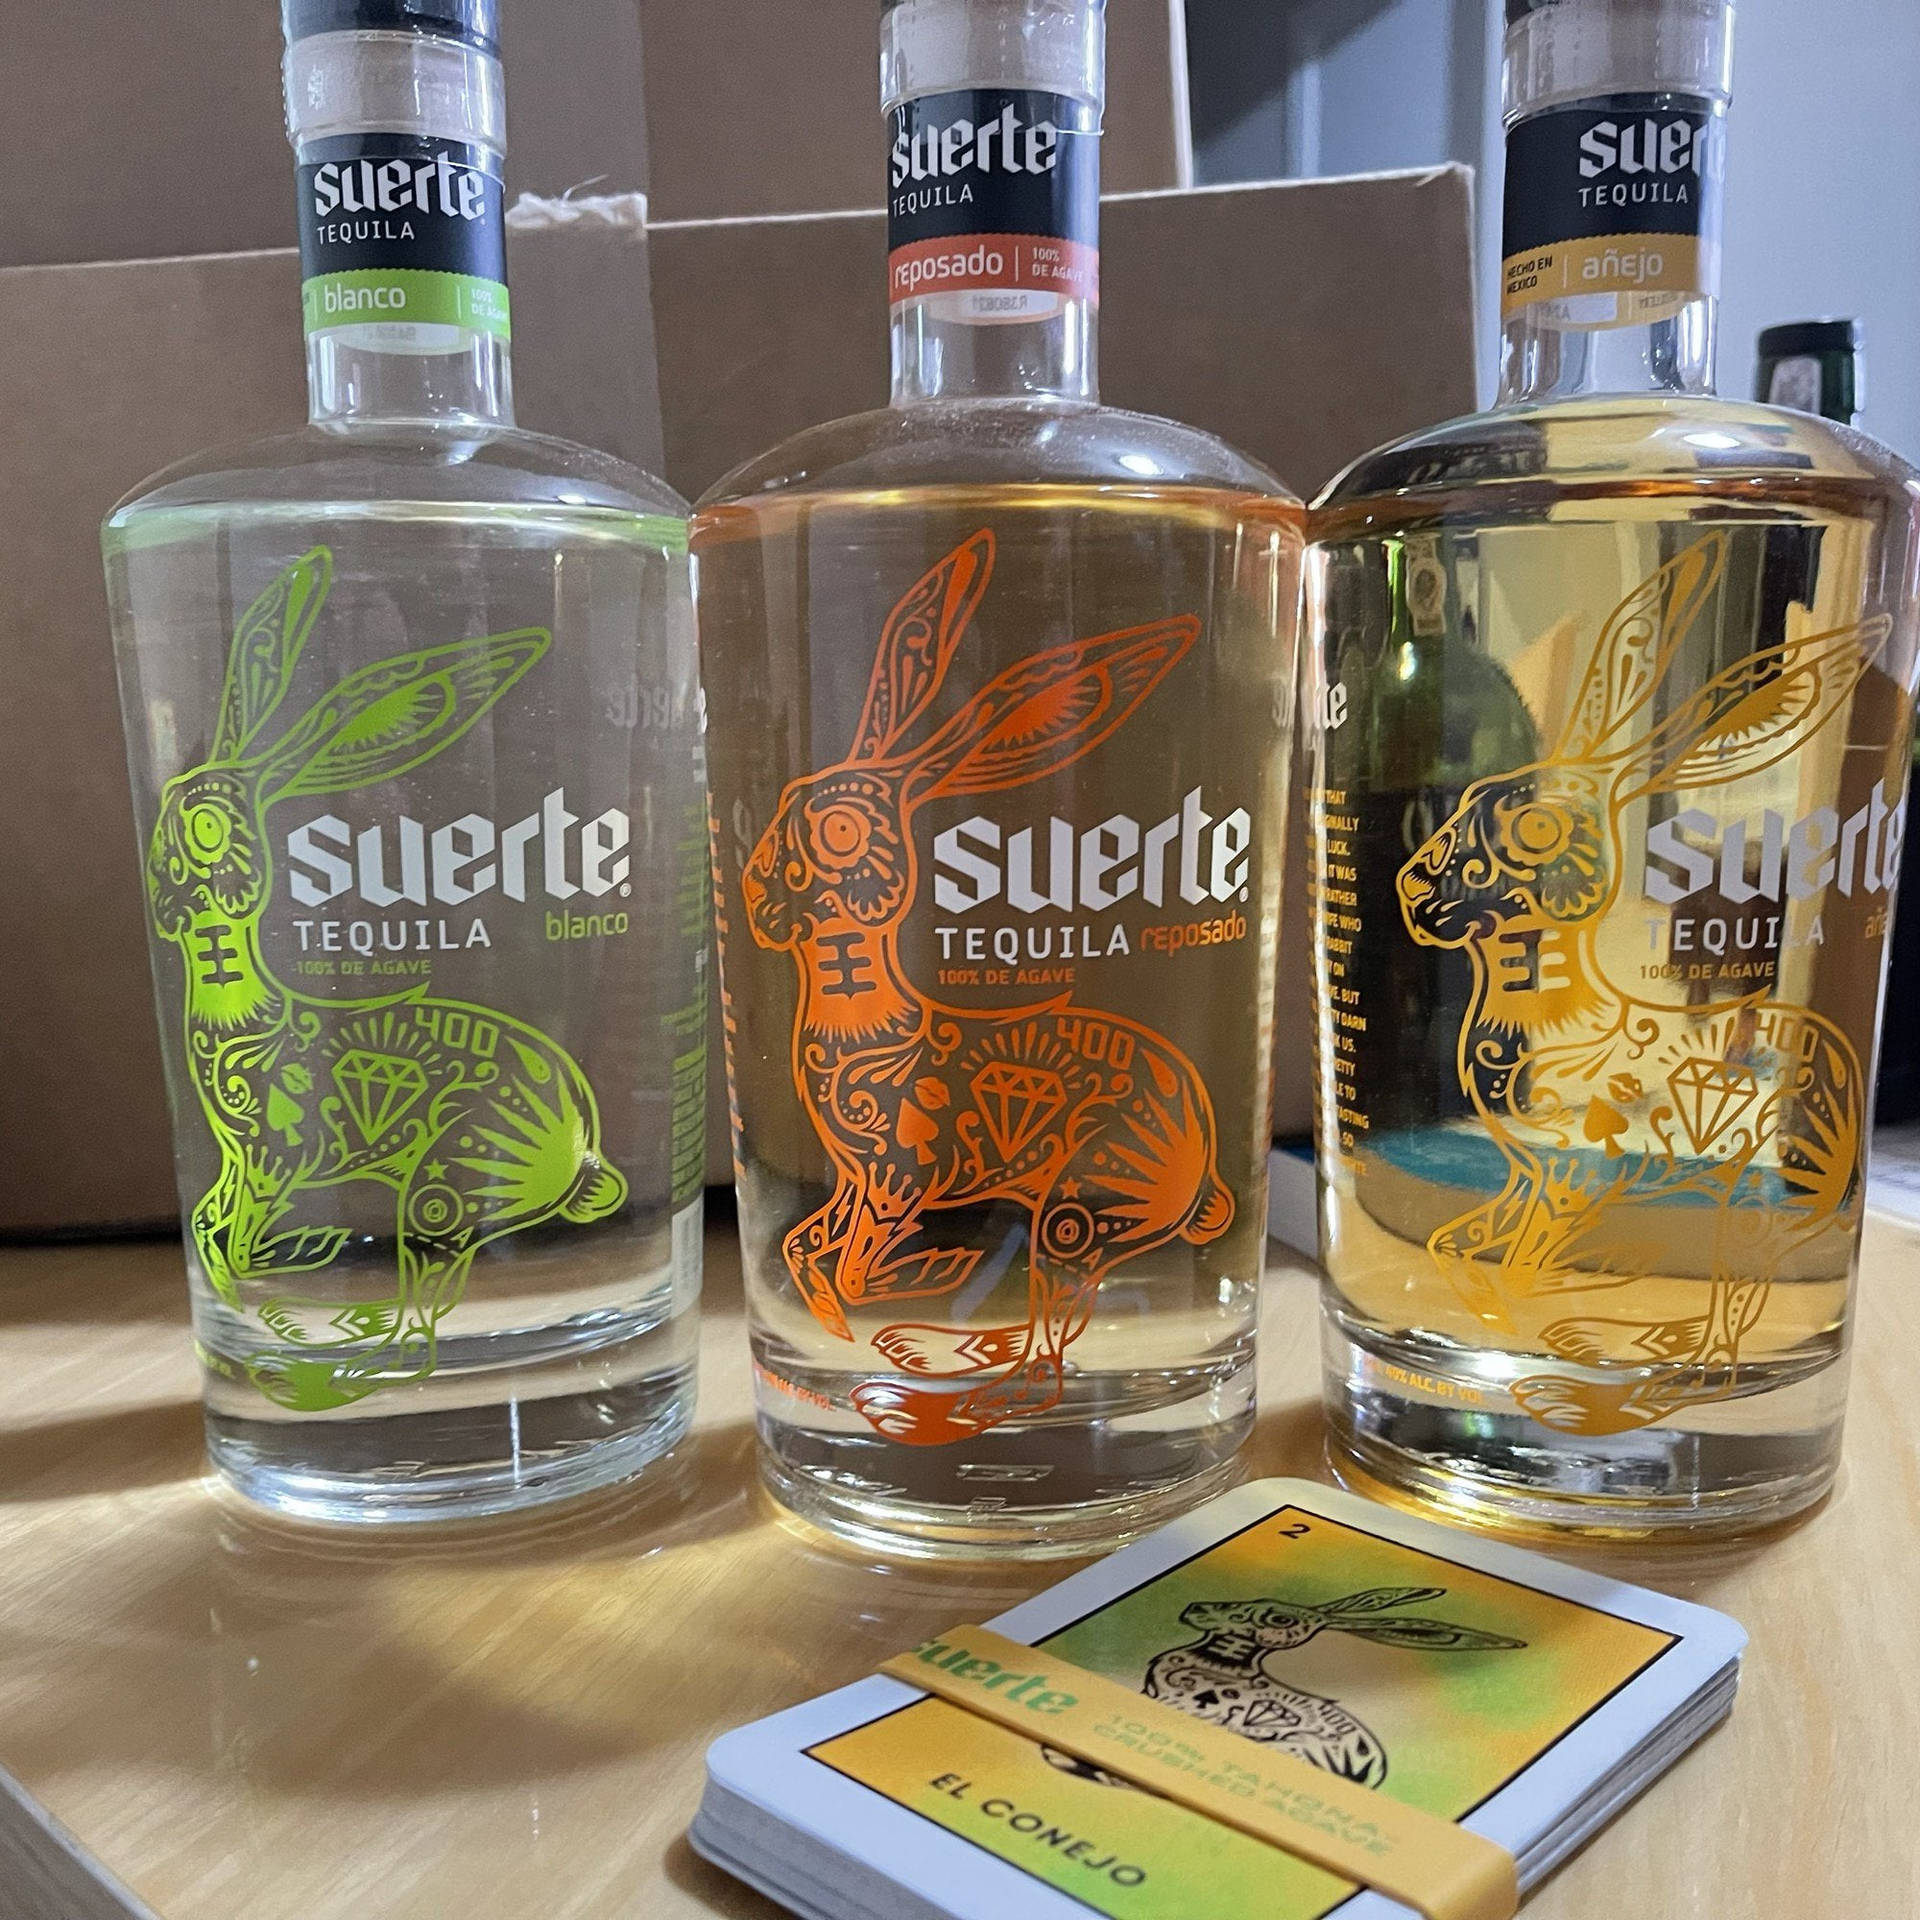 Suerte Three Types Of Tequila Wallpaper